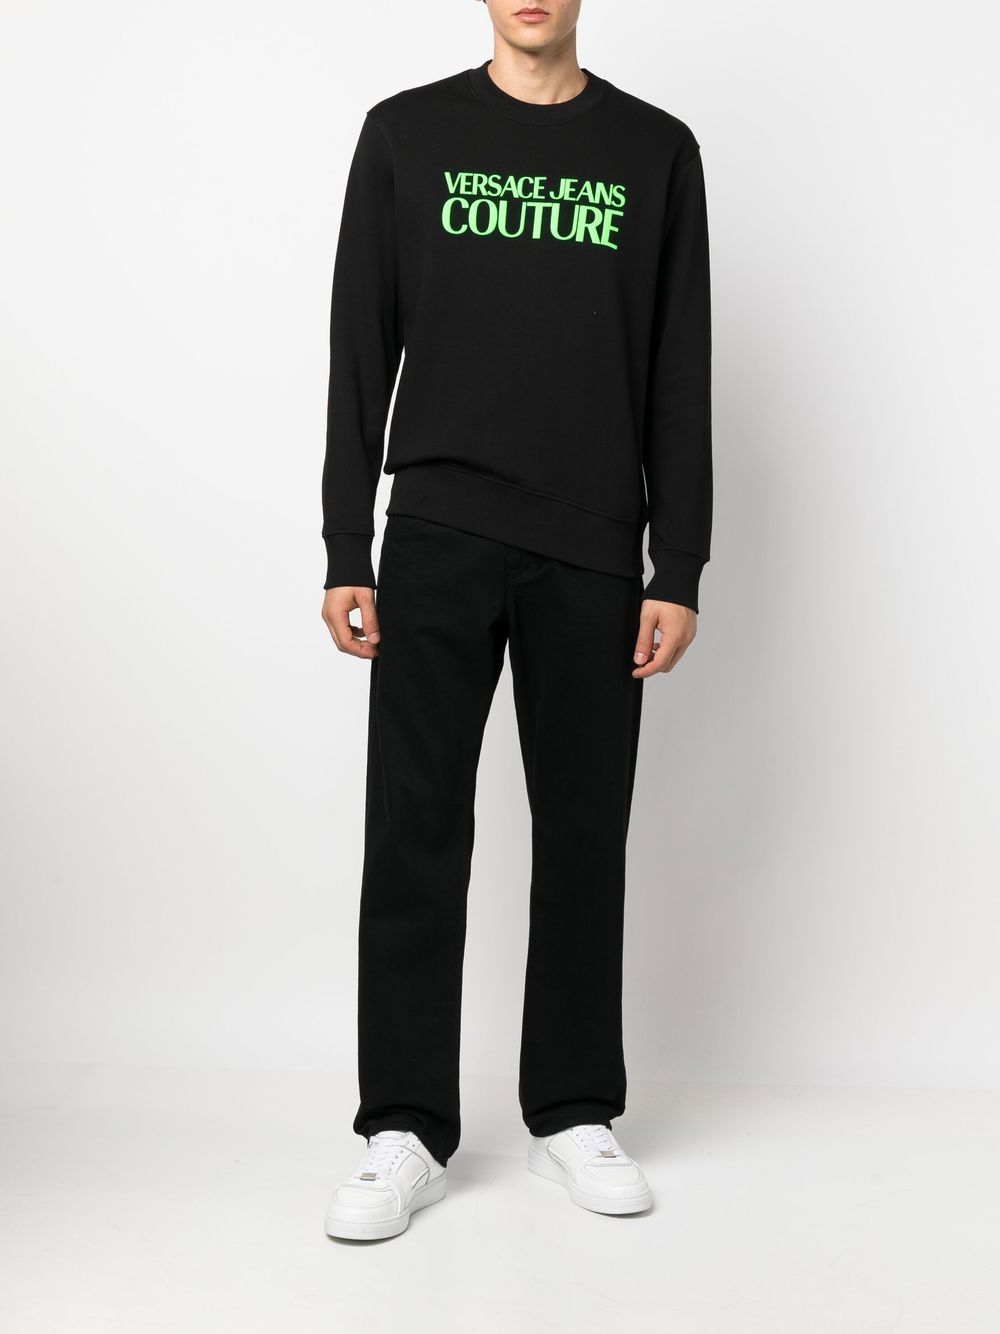 Versace Jeans Couture logo-print Cotton Sweatshirt - Farfetch